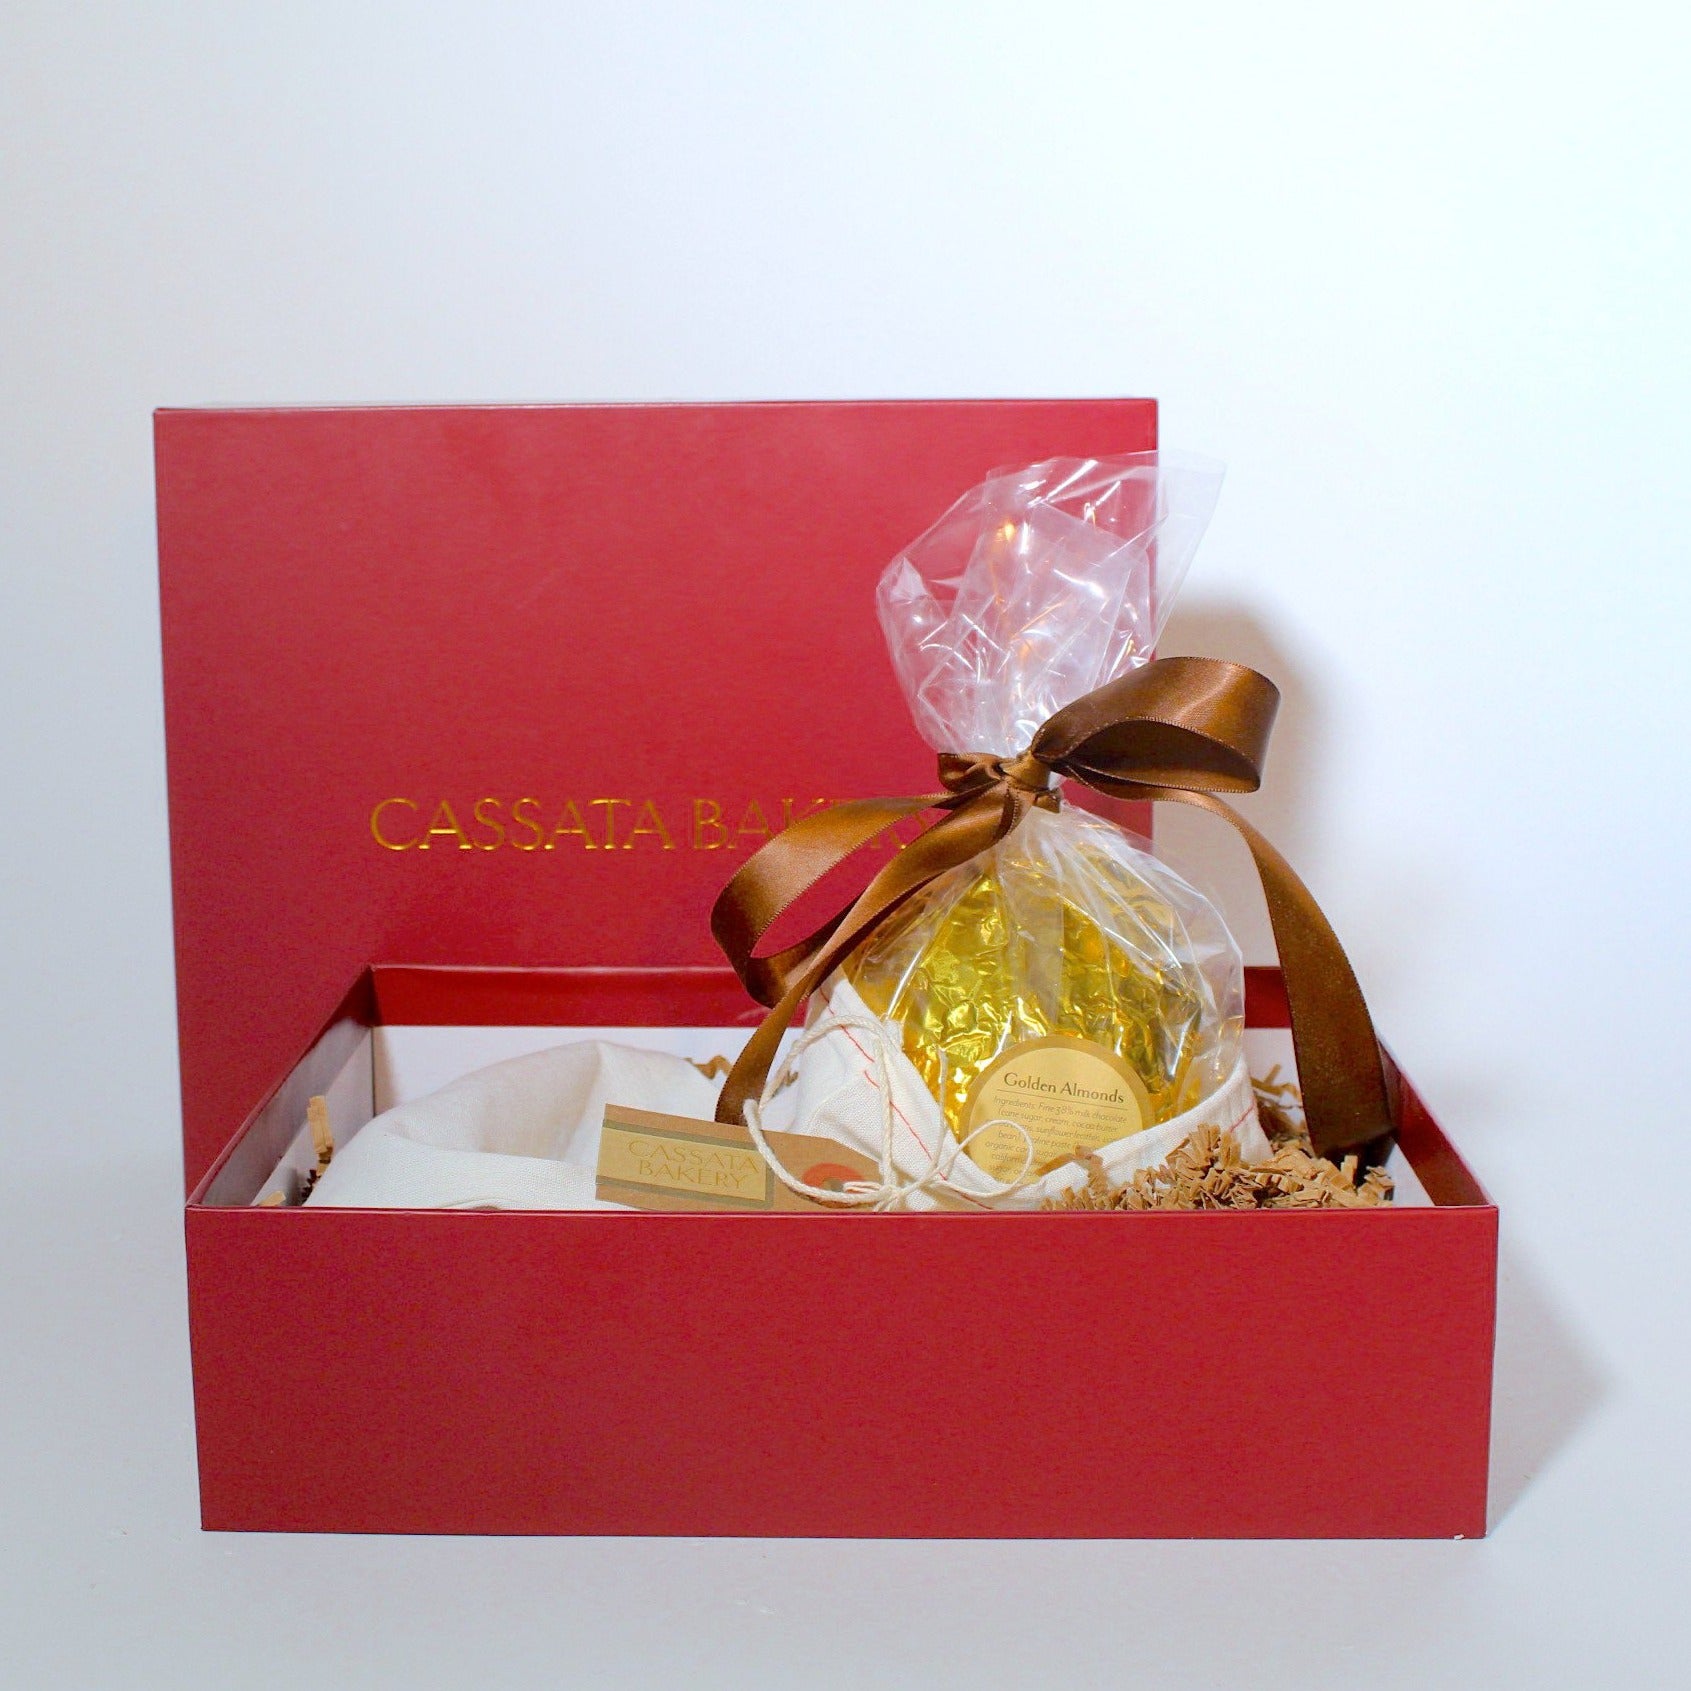 Cassata Bakery Golden Egg 61% dark chocolated filled with our signature Golden Almonds